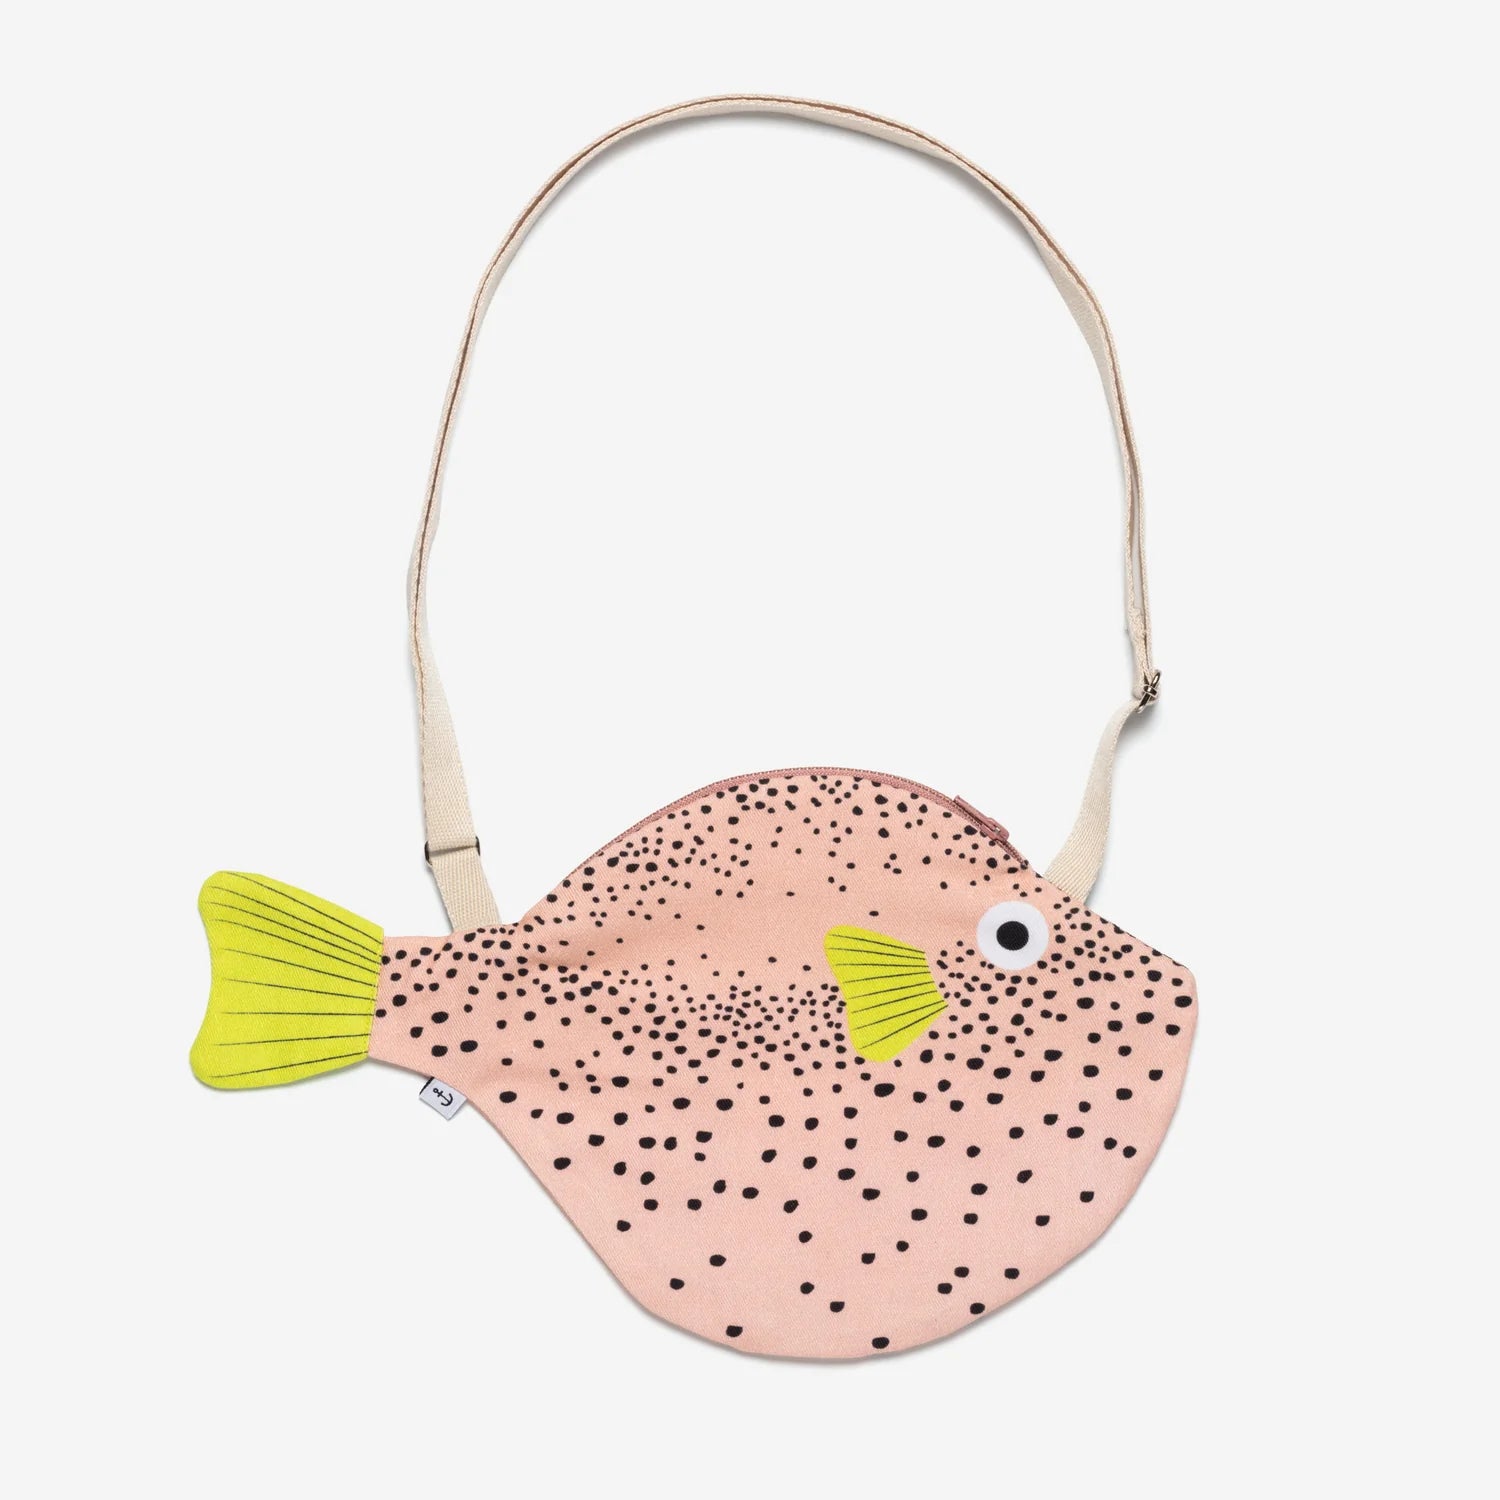 Small Pink Pufferfish bag